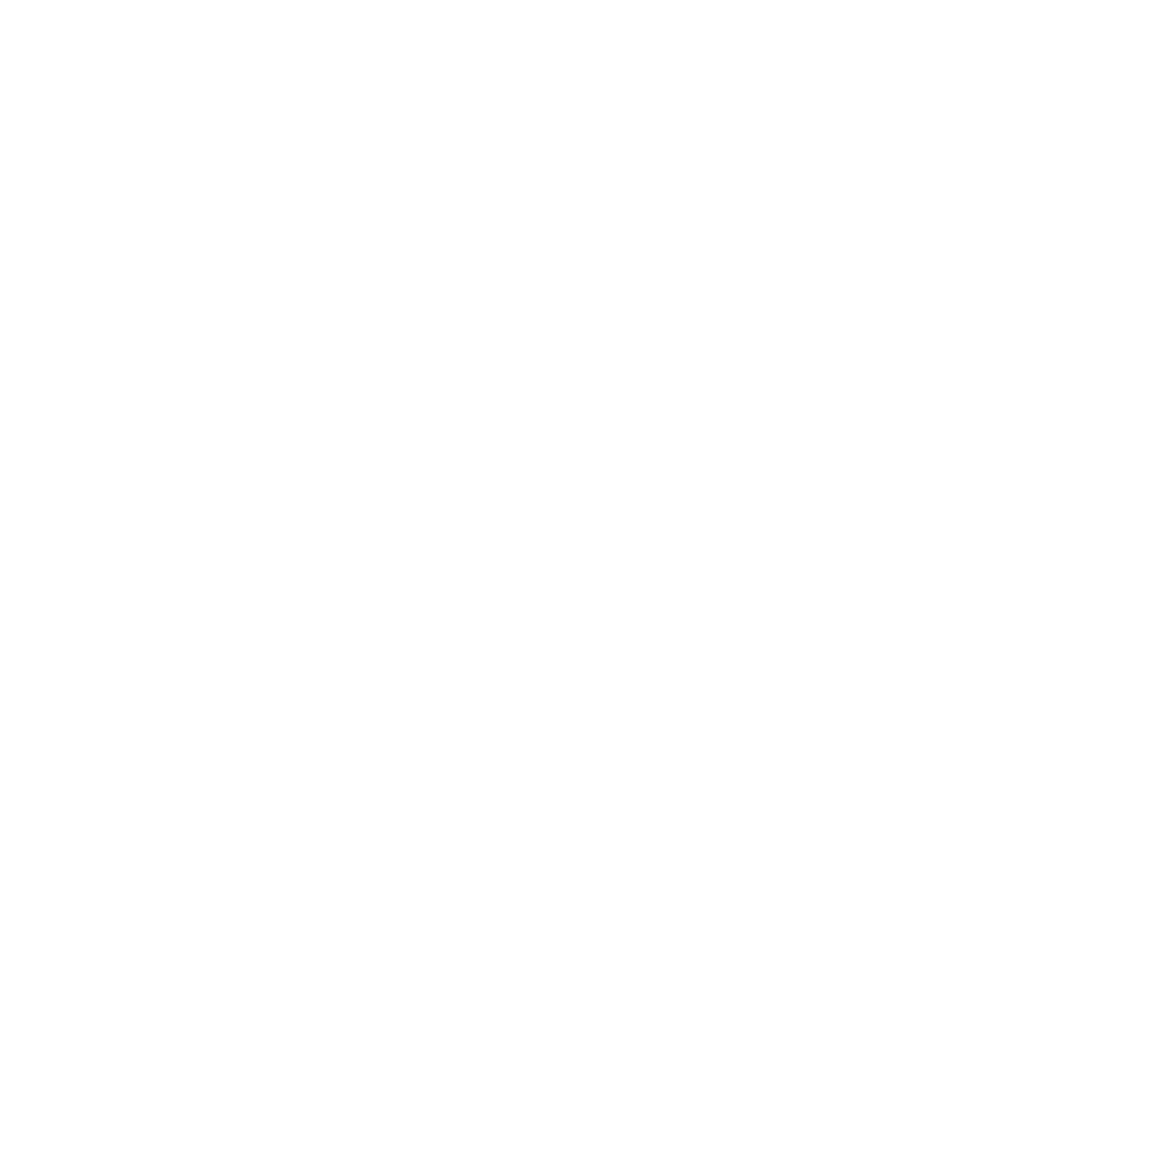 SIFT Fonktown Production Companyshift